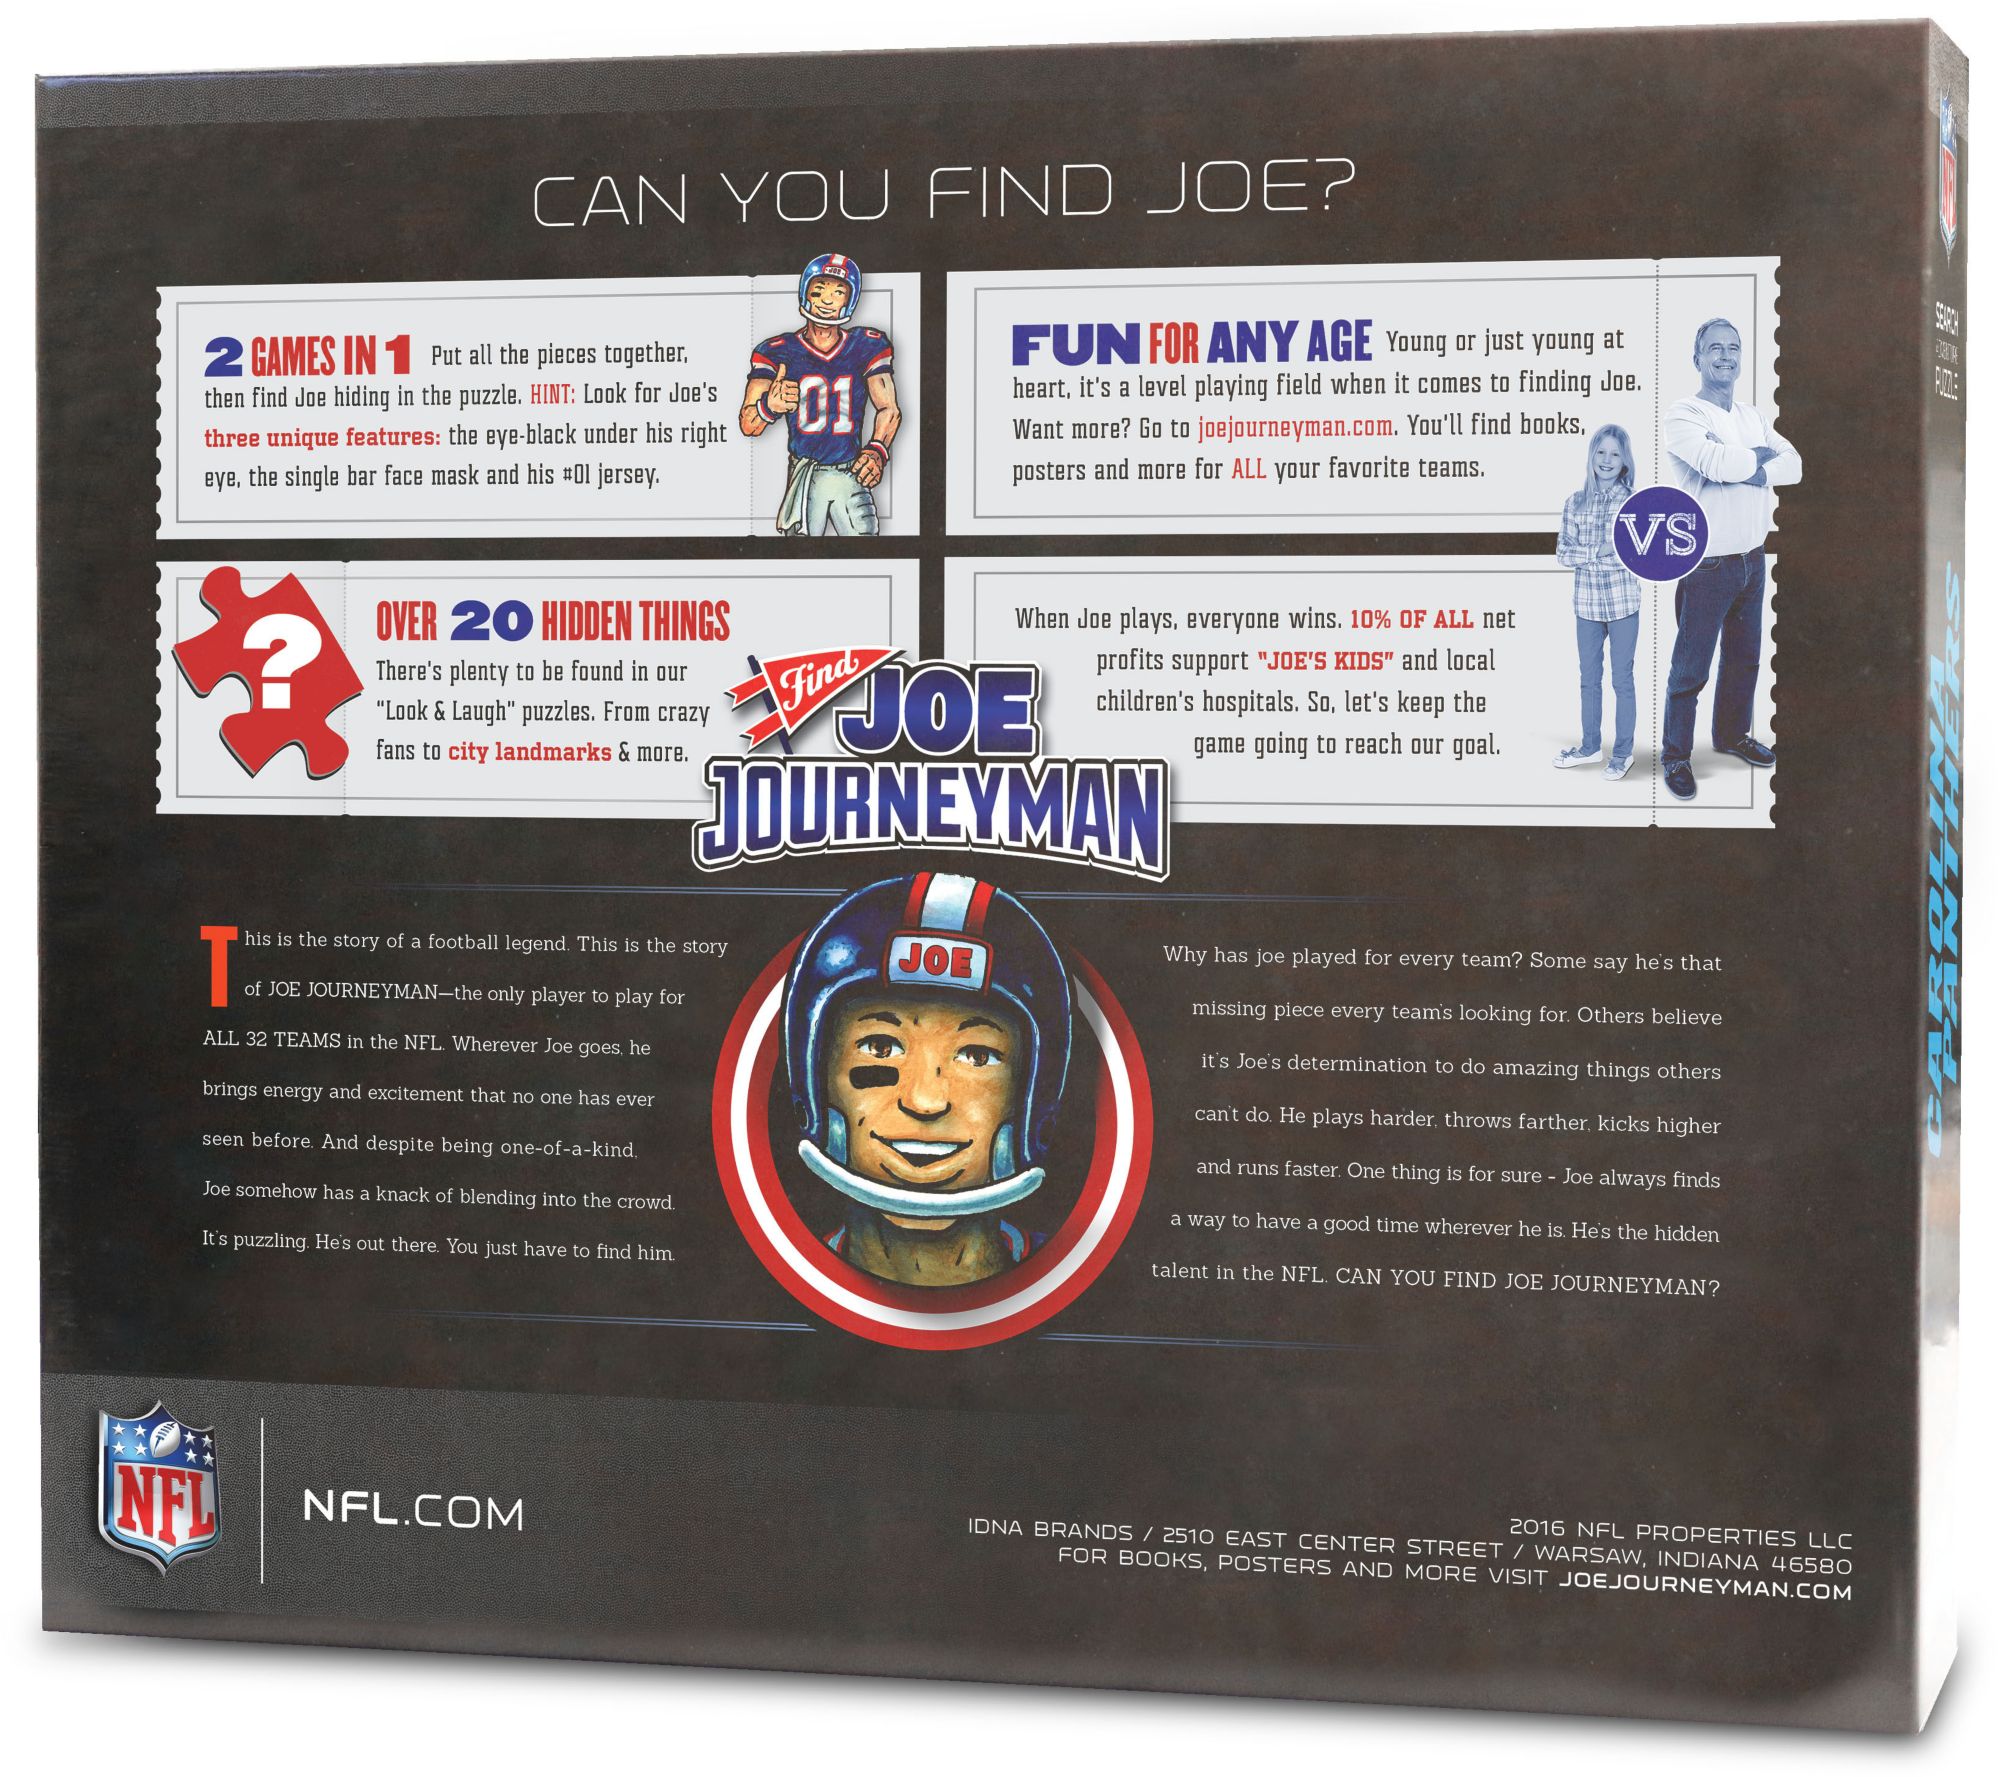 You the Fan Carolina Panthers Find Joe Journeyman Puzzle